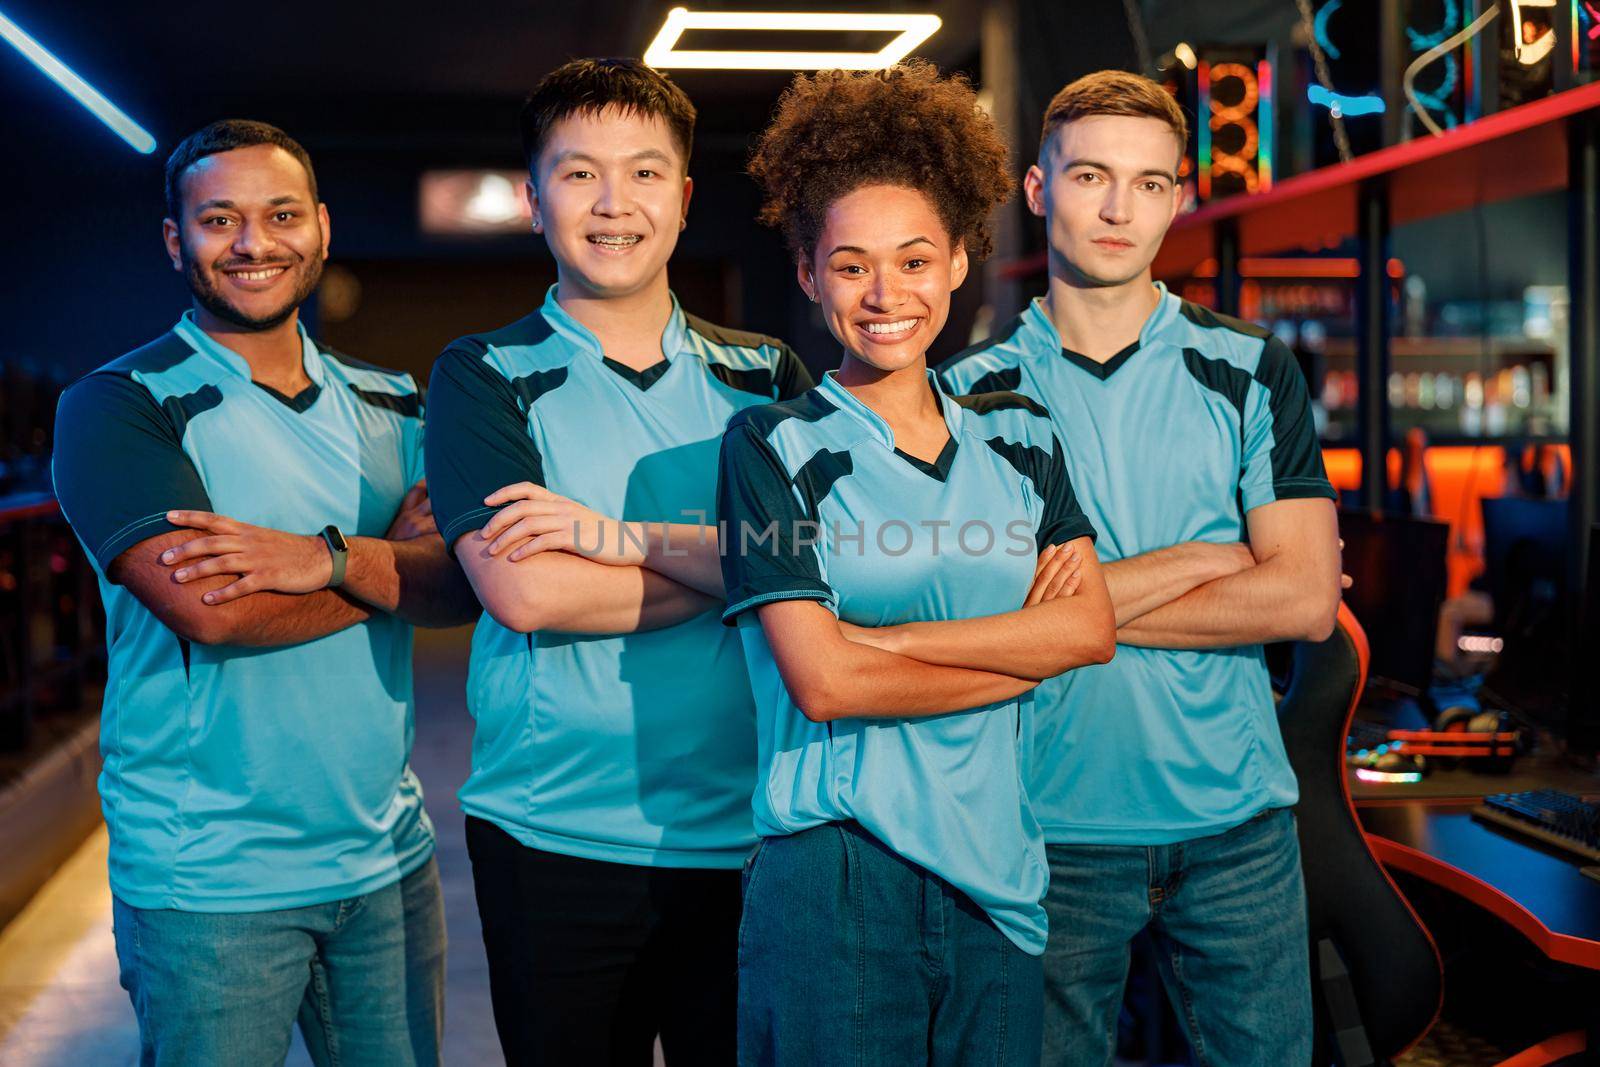 Professional team posing at camera in cyber club by Yaroslav_astakhov